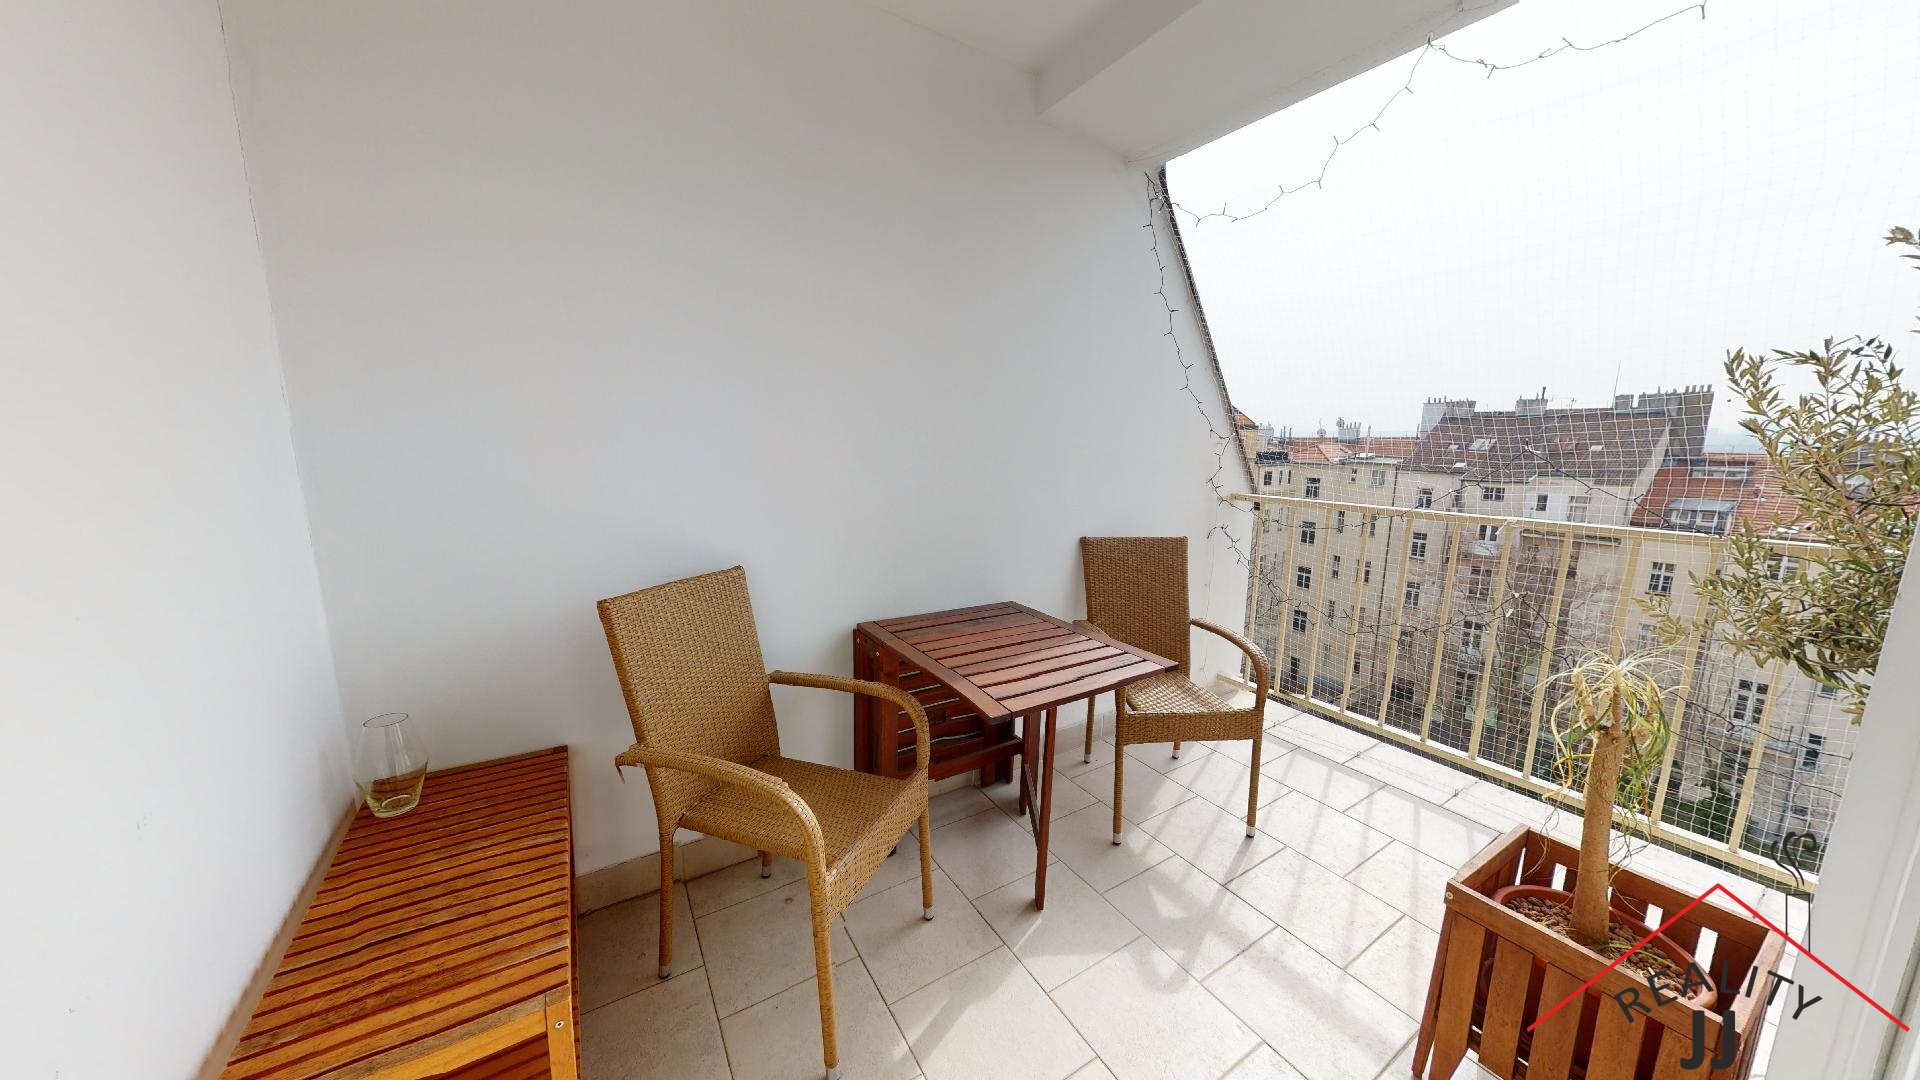 Duplex-apartment-for-sell-Luzicka-street-Praha-2-03192022_115301